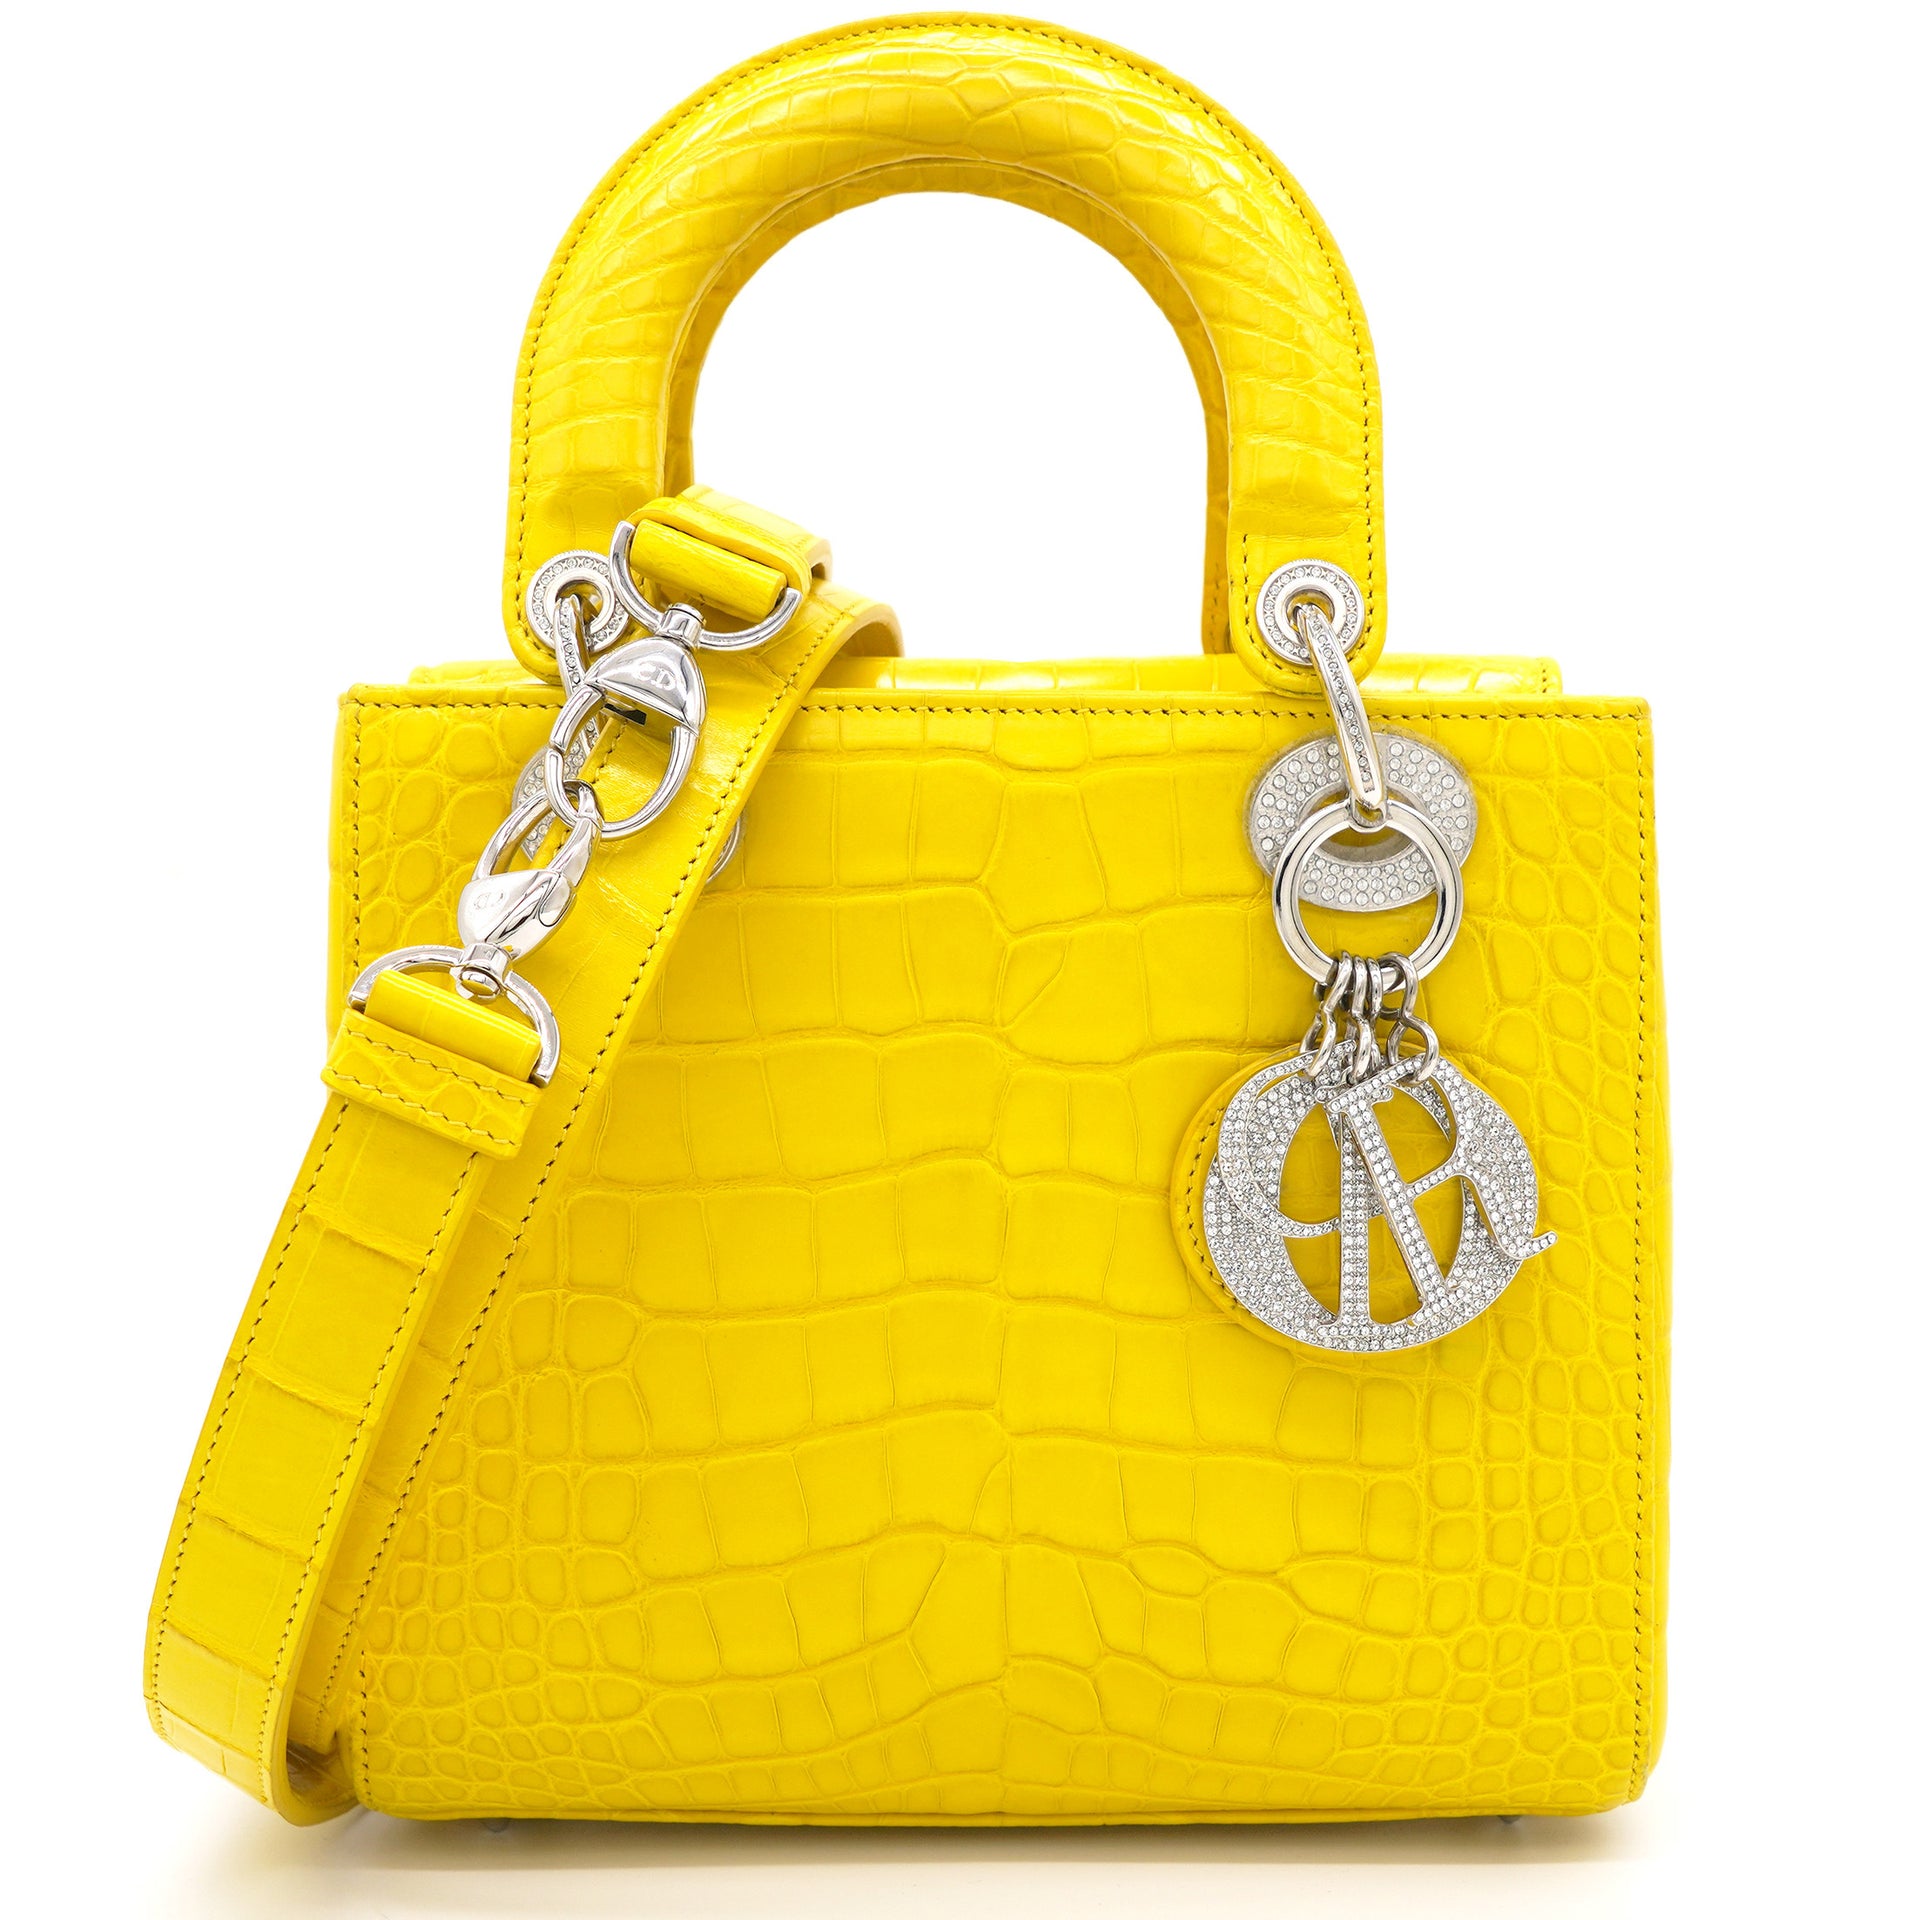 Lady Dior Bag Size Comparison  FifthAvenueGirlcom